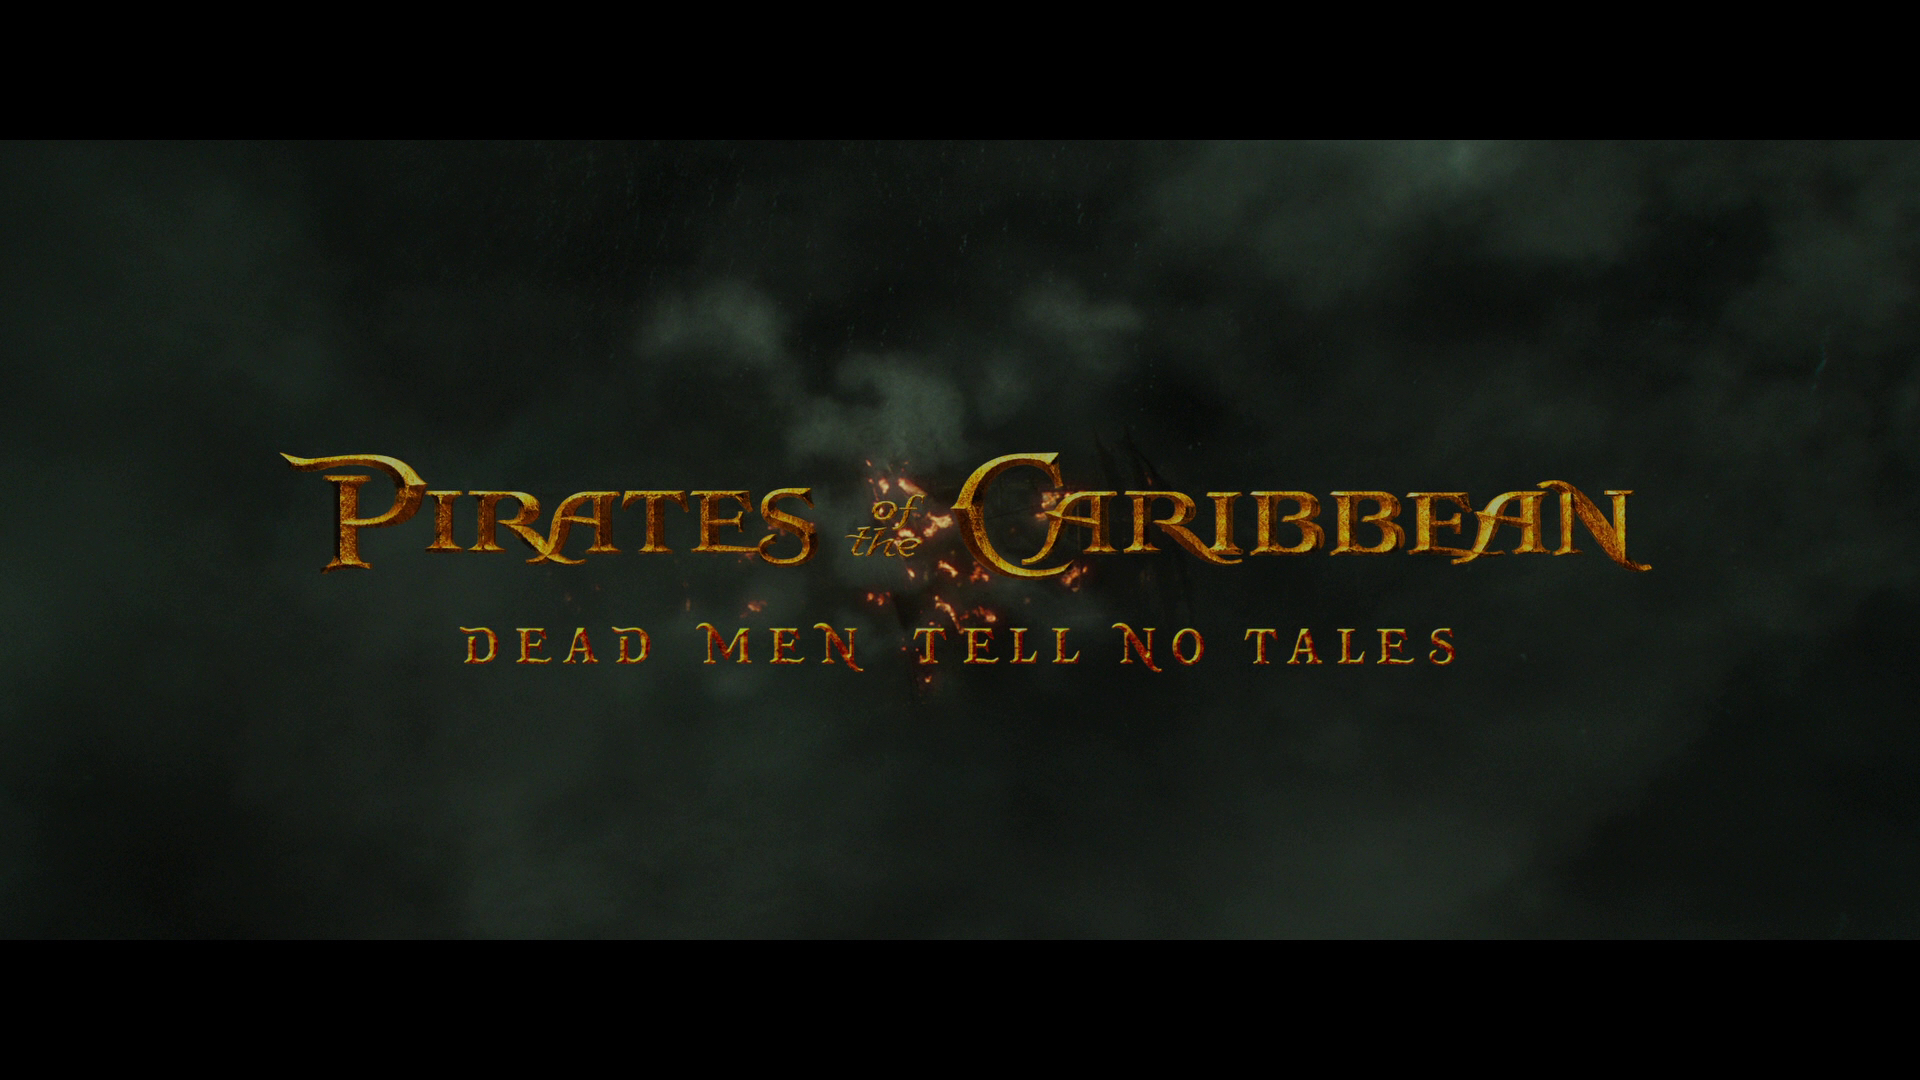 Pirates Of The Caribbean Dead Men Tell No Tales 4k Ultra